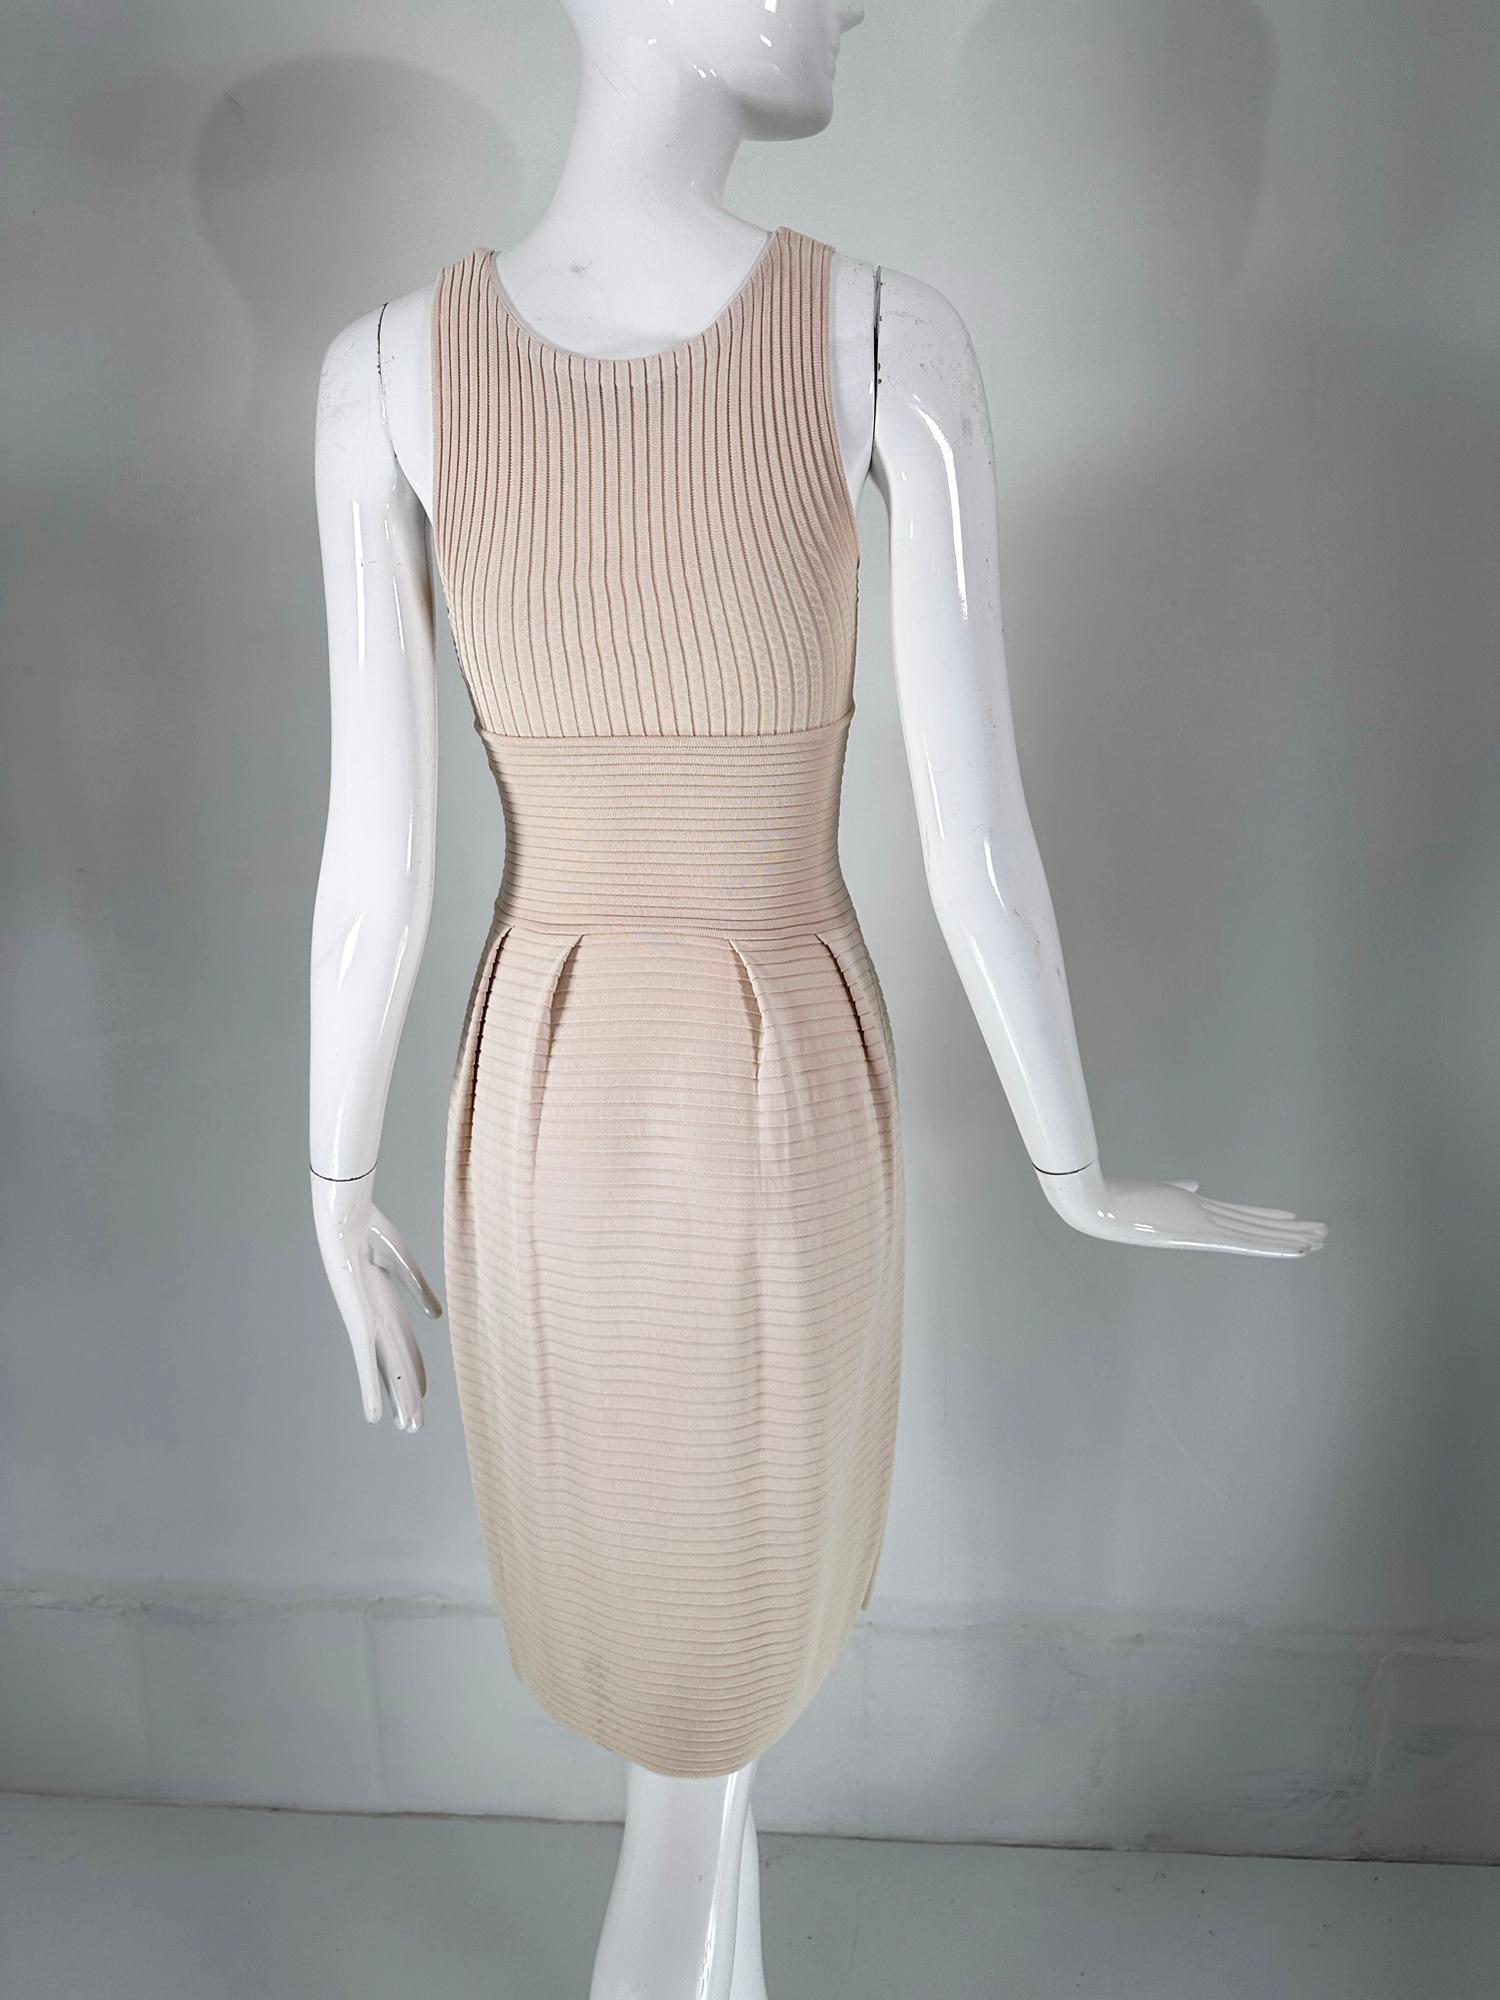 Christian Dior Paris Ribbed Knit Beige Tank Dress 2010 For Sale 4